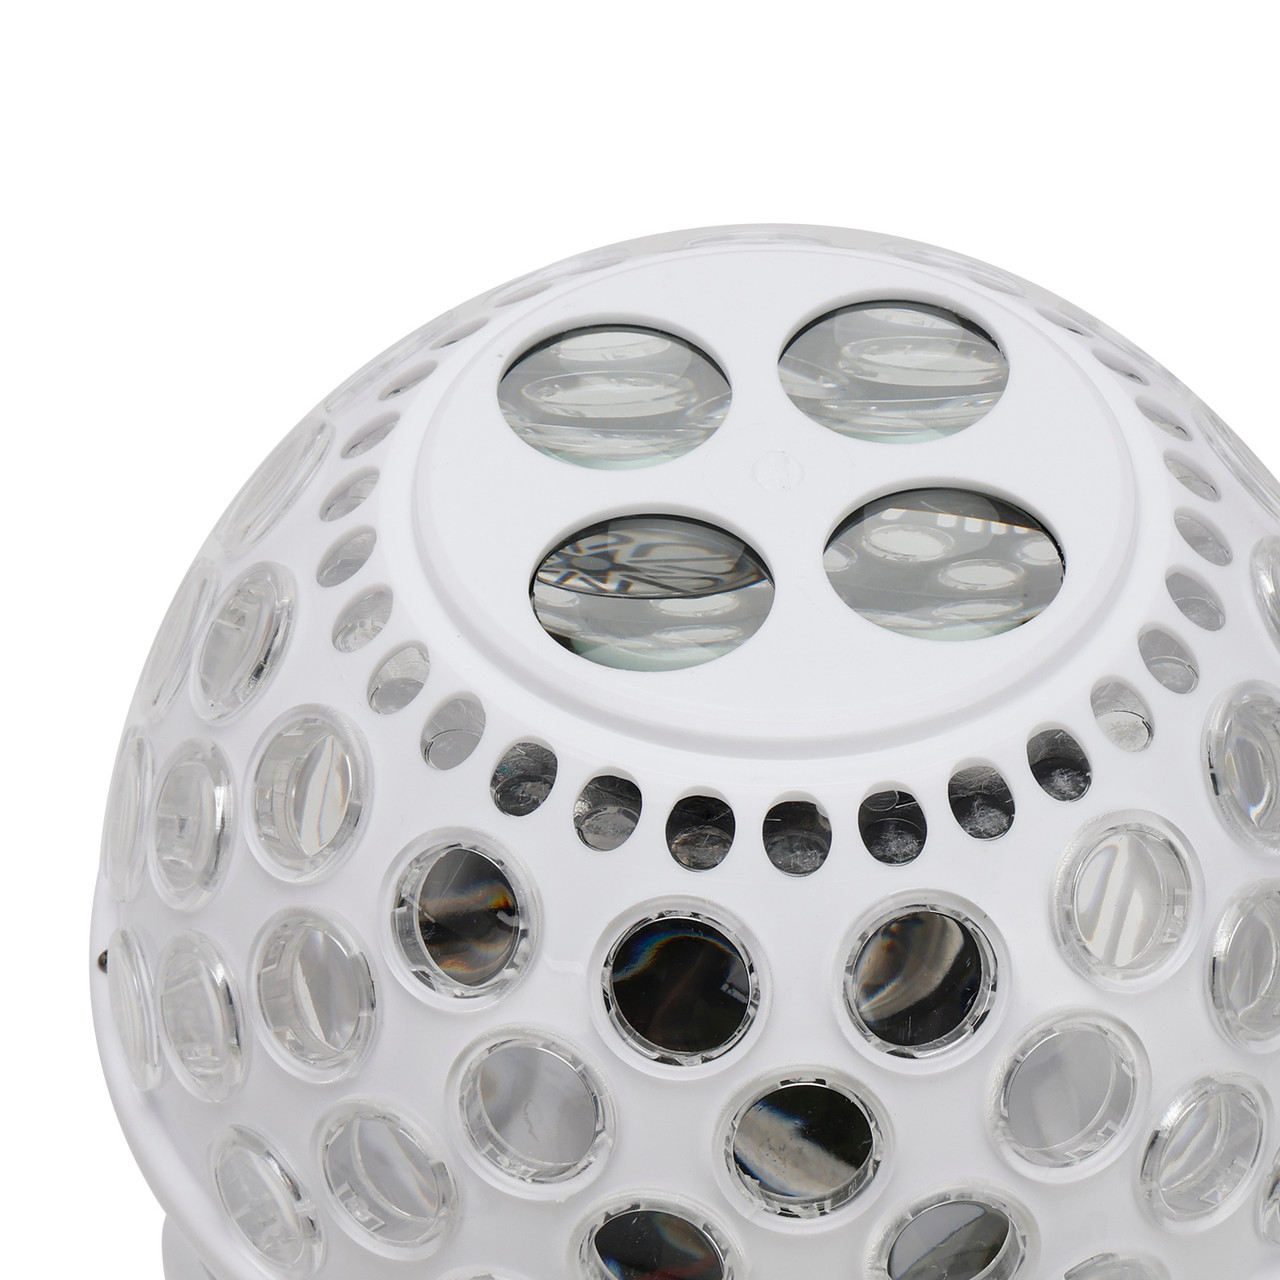 AU Plug Lantern Pattern 12 LED Stage Light DJ KTV Projector Disco Party Magic Ball